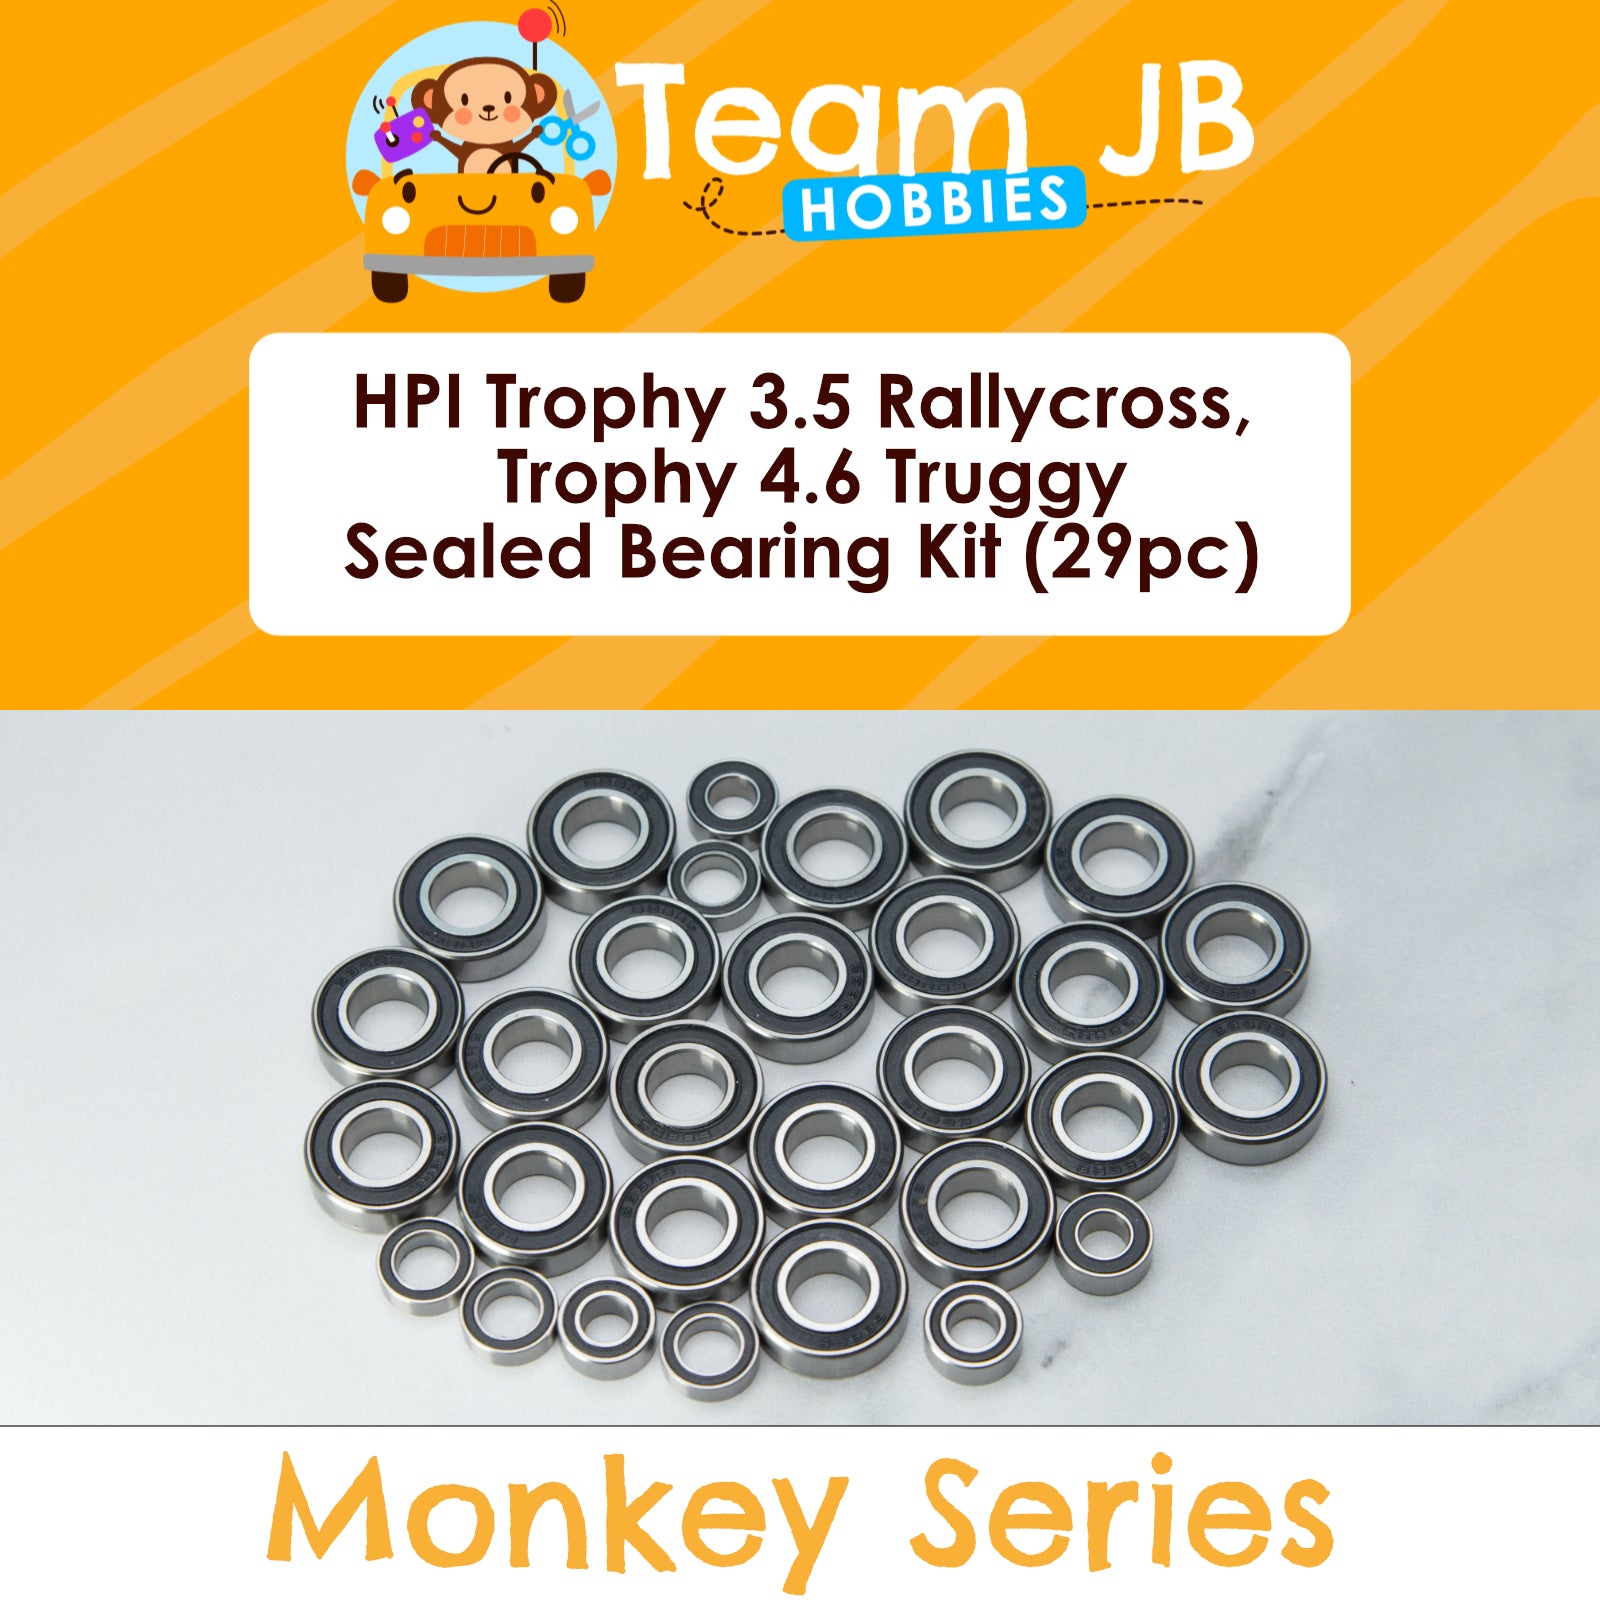 HPI Trophy 3.5 Rallycross, Trophy 4.6 Truggy - Sealed Bearing Kit